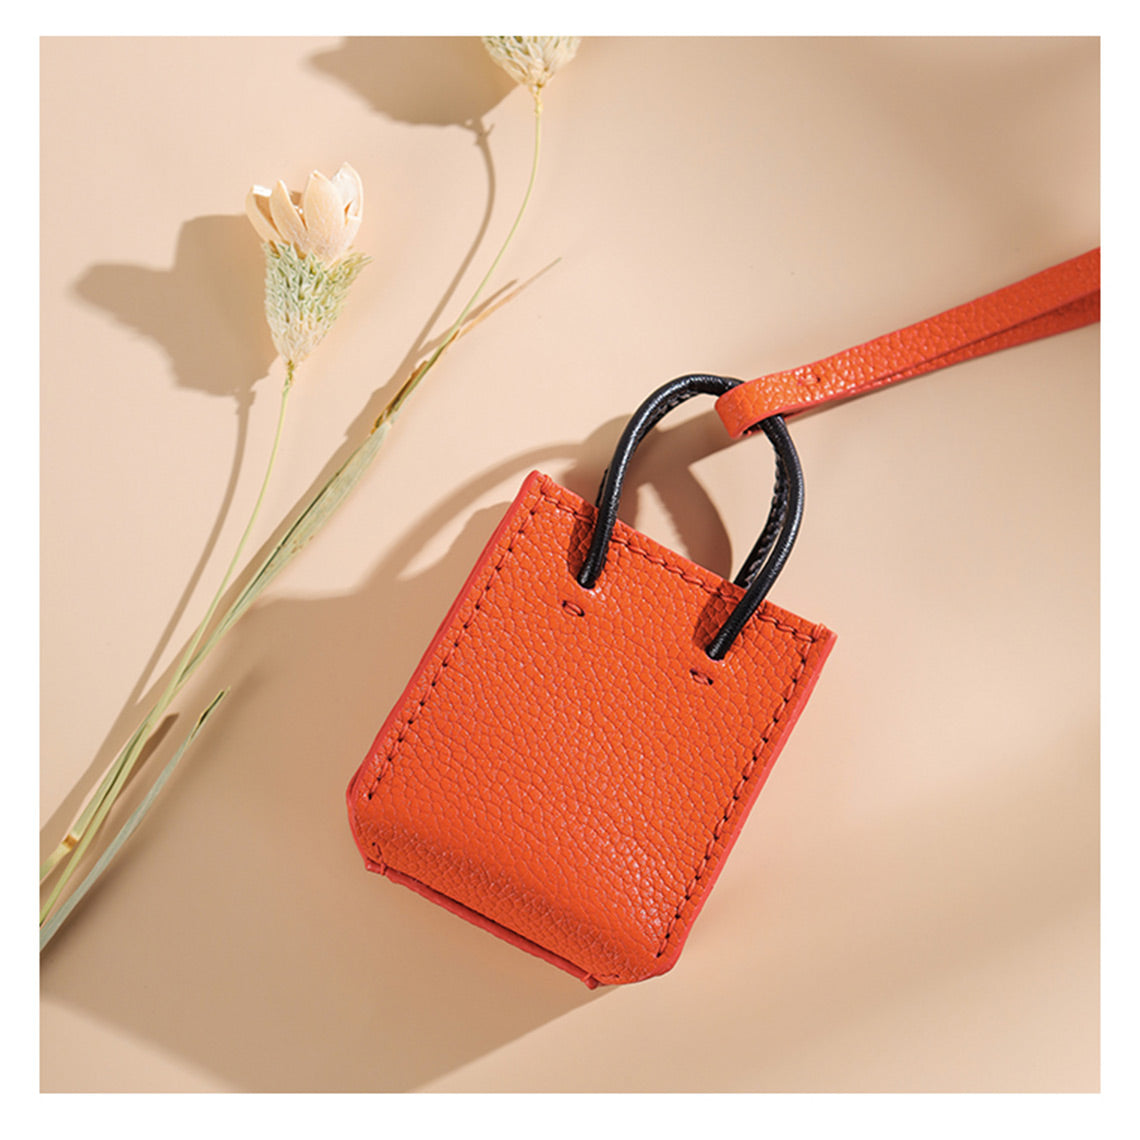 DIY orange leather bag charm kit | Handmade leather purse charm